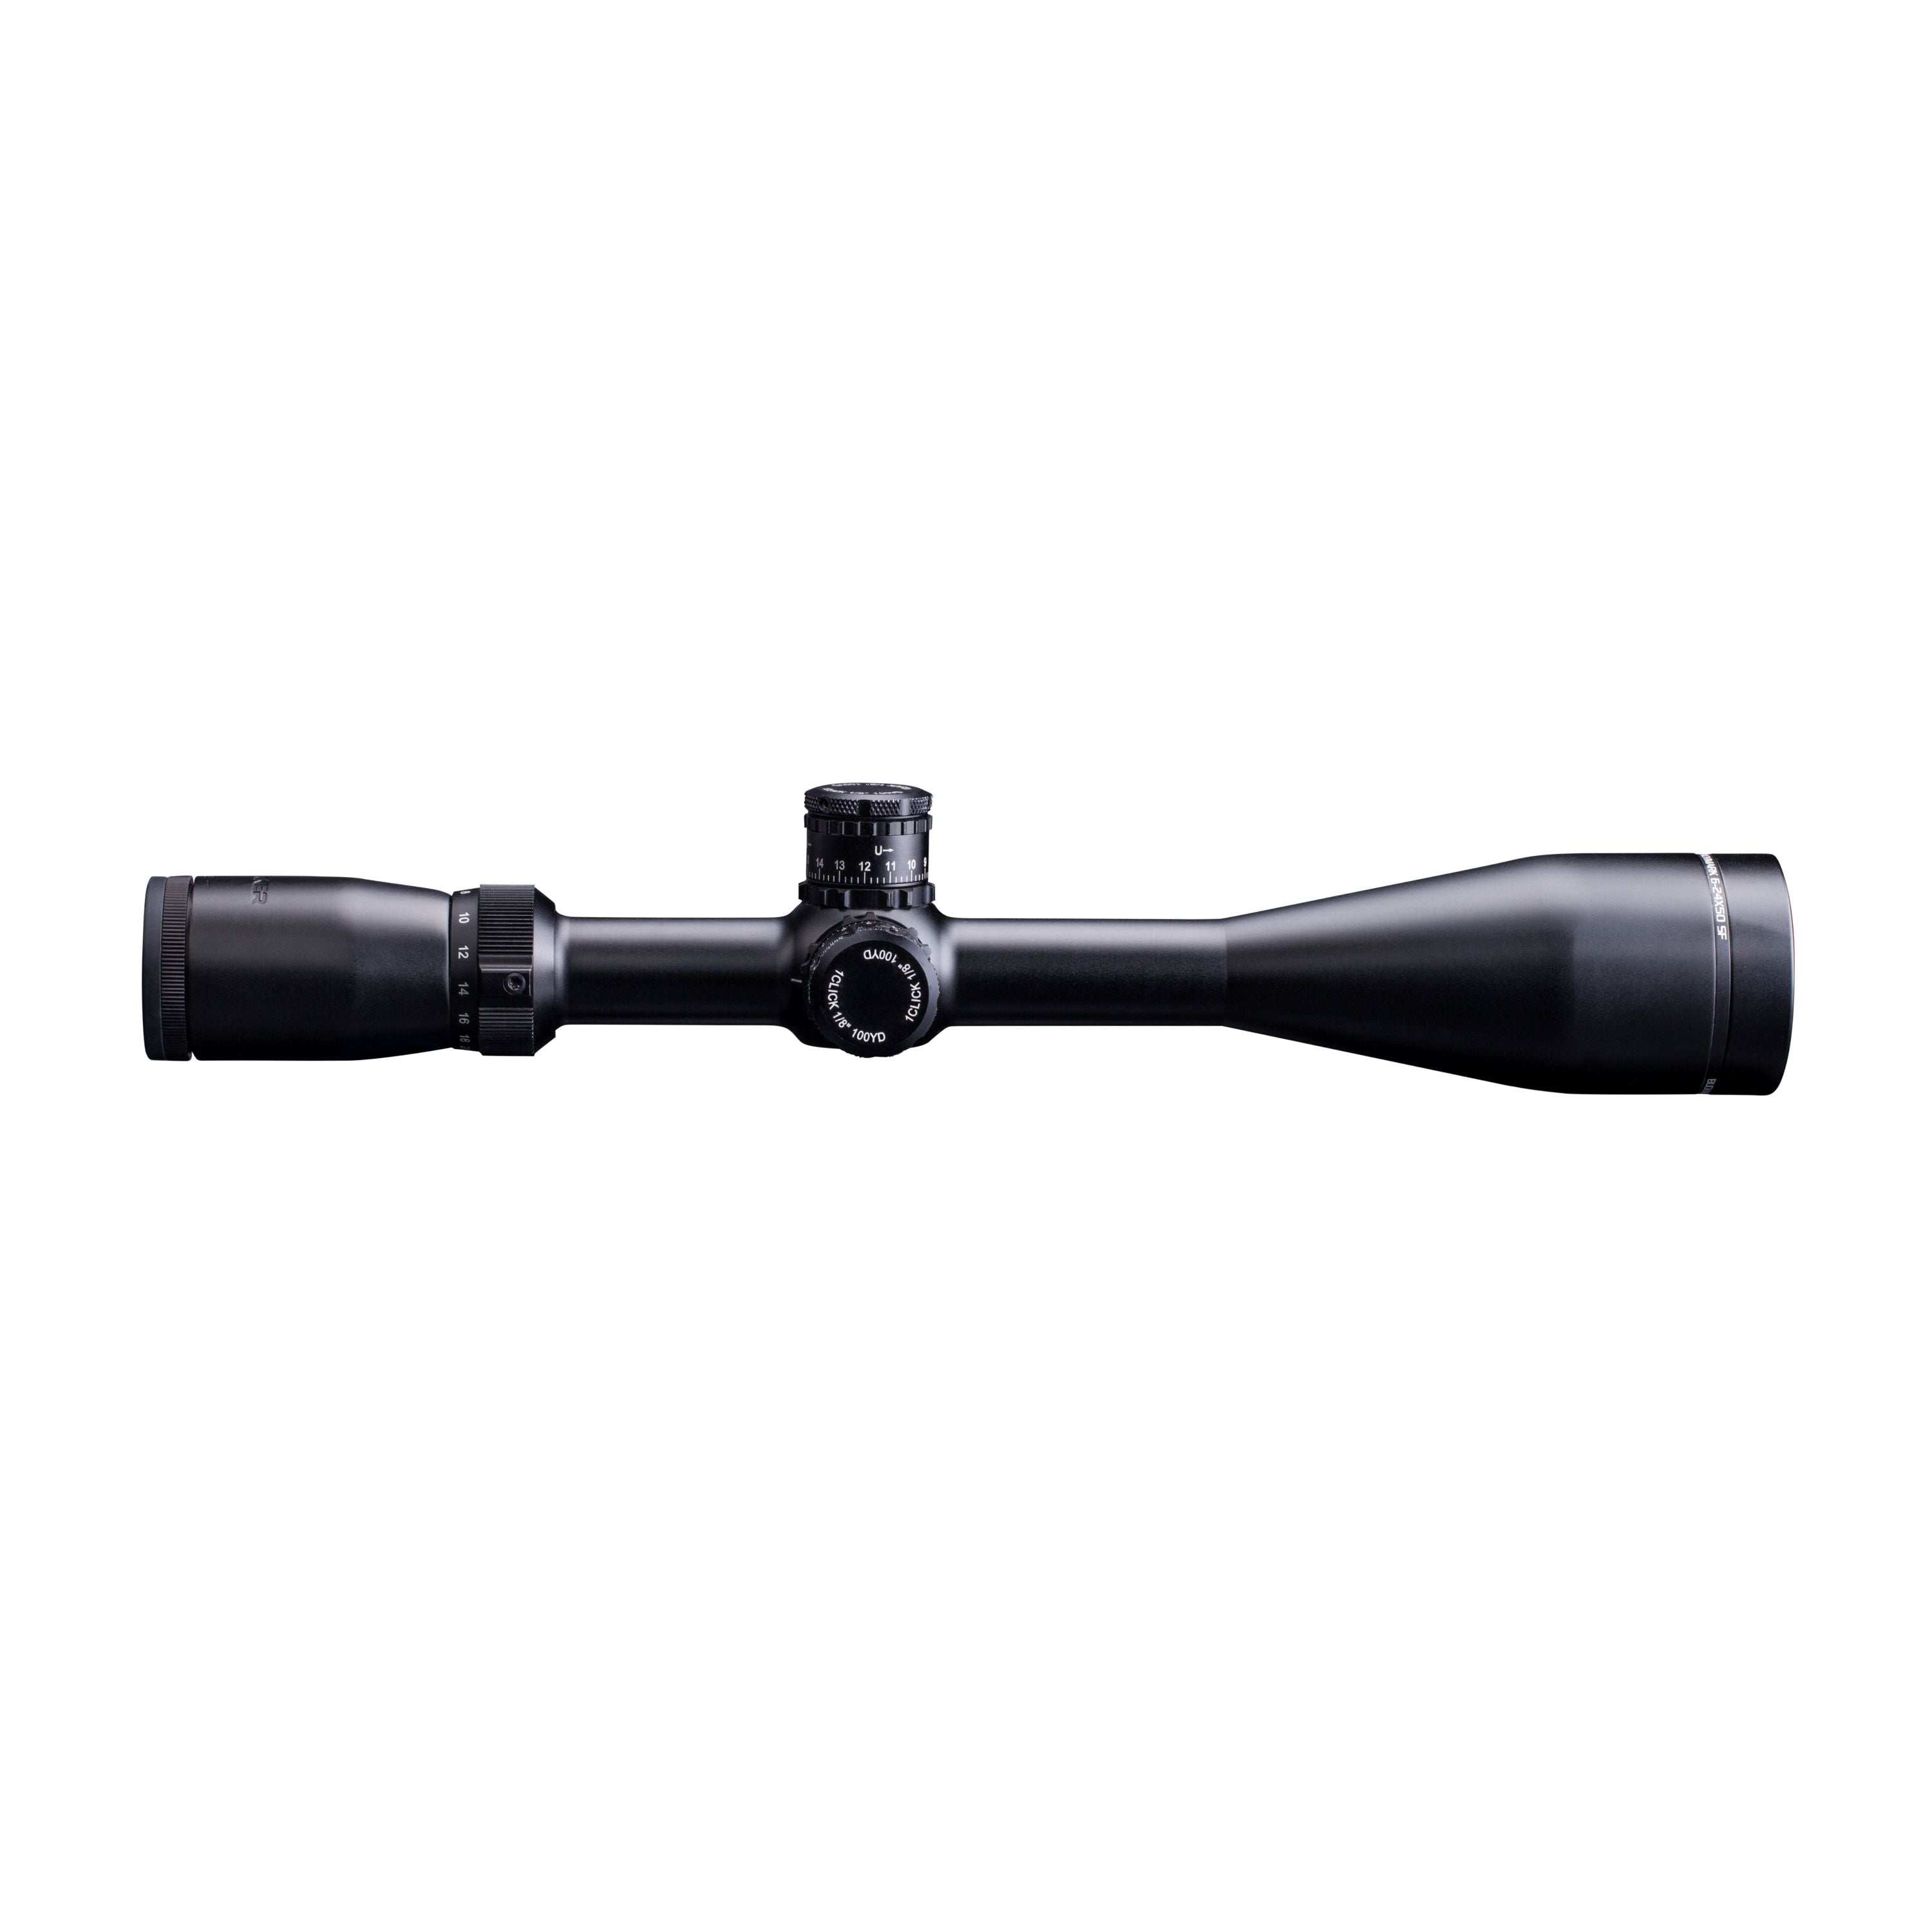 Benchmark 6-24X50 SF scope